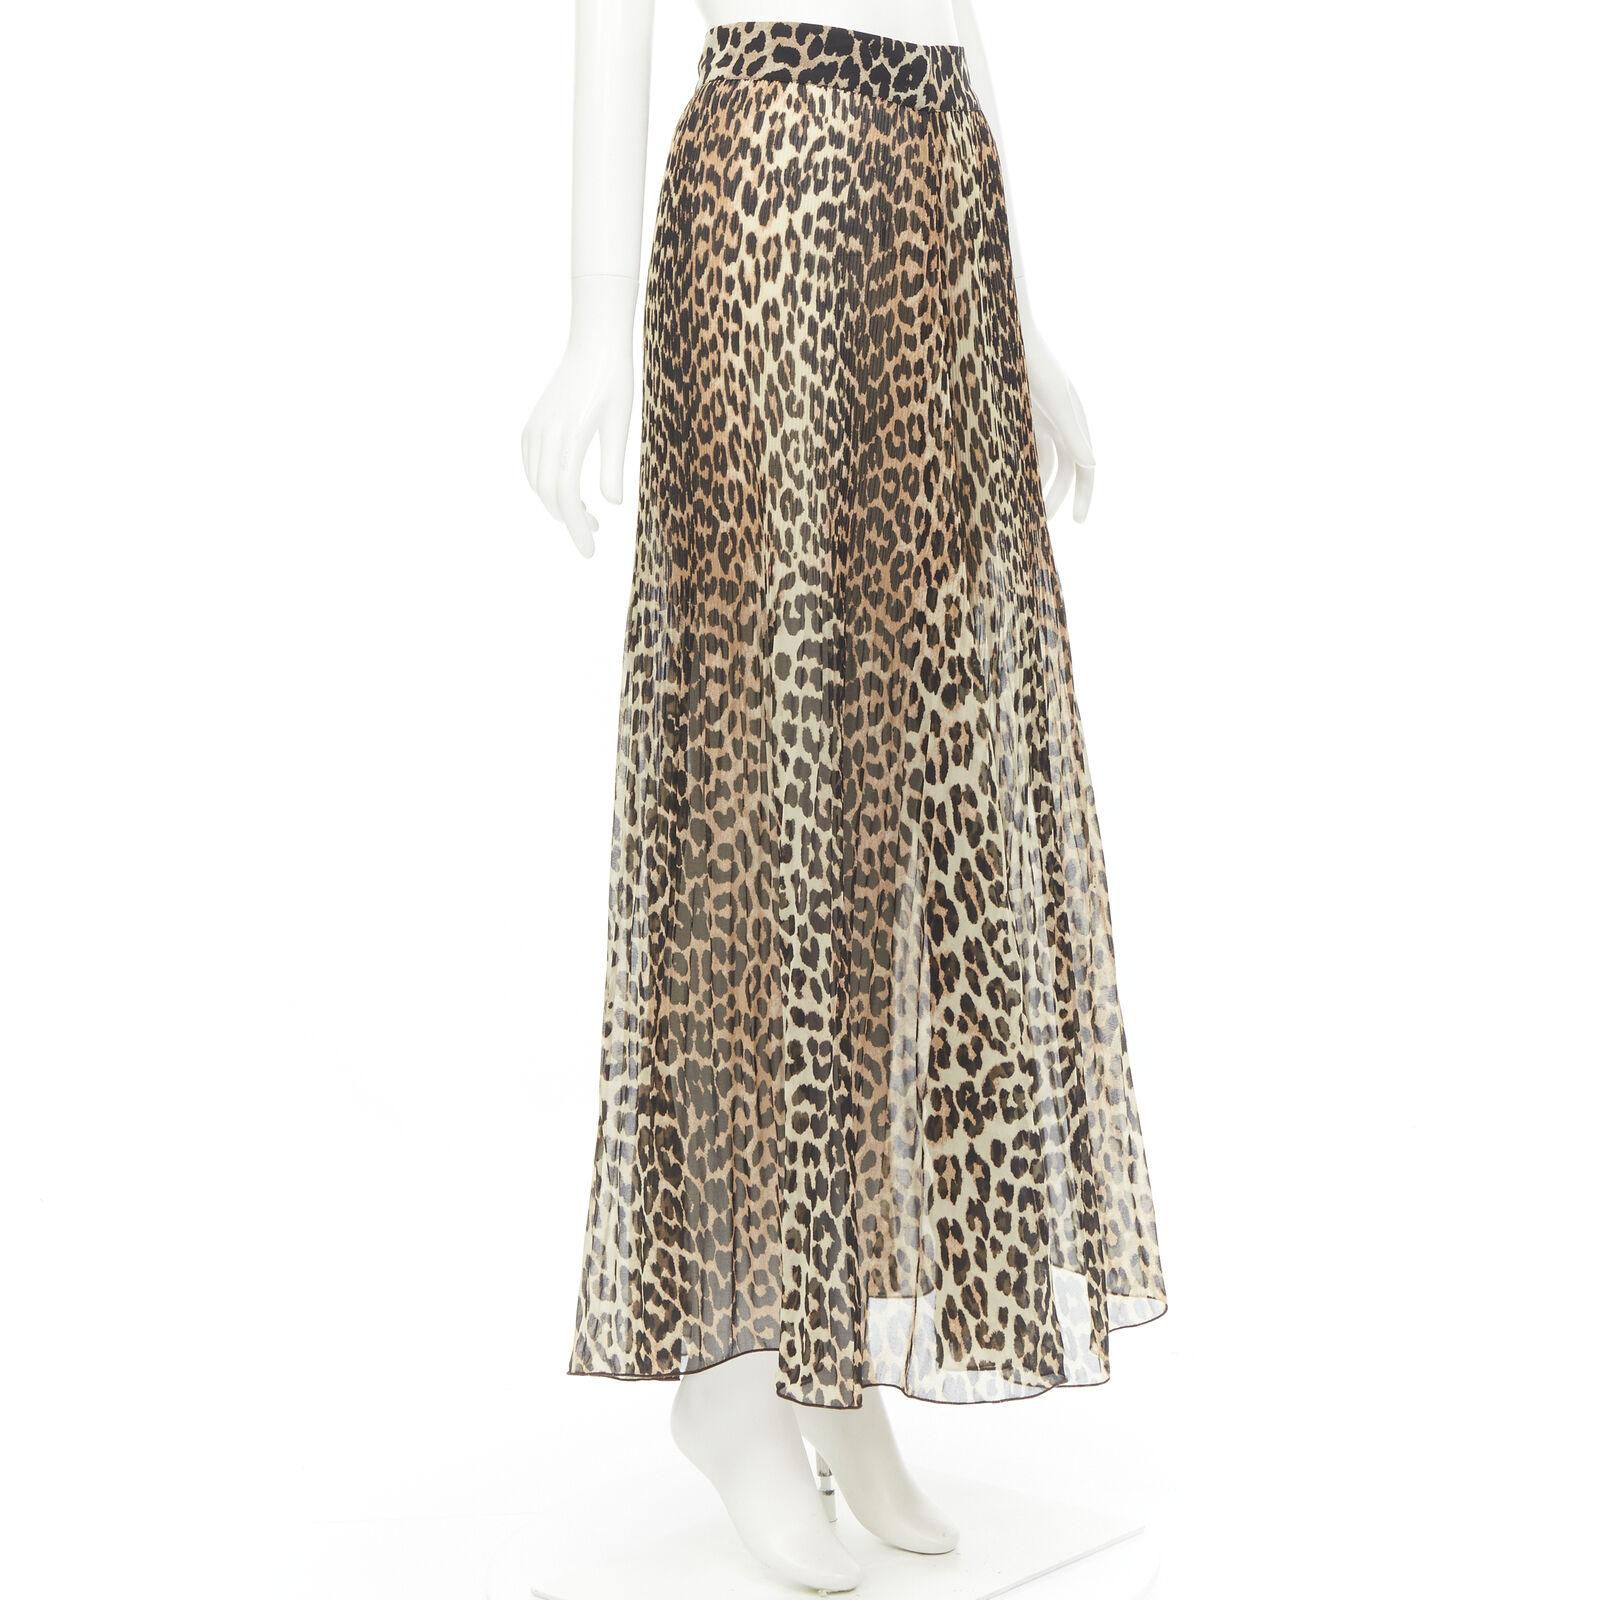 ganni leopard print skirt